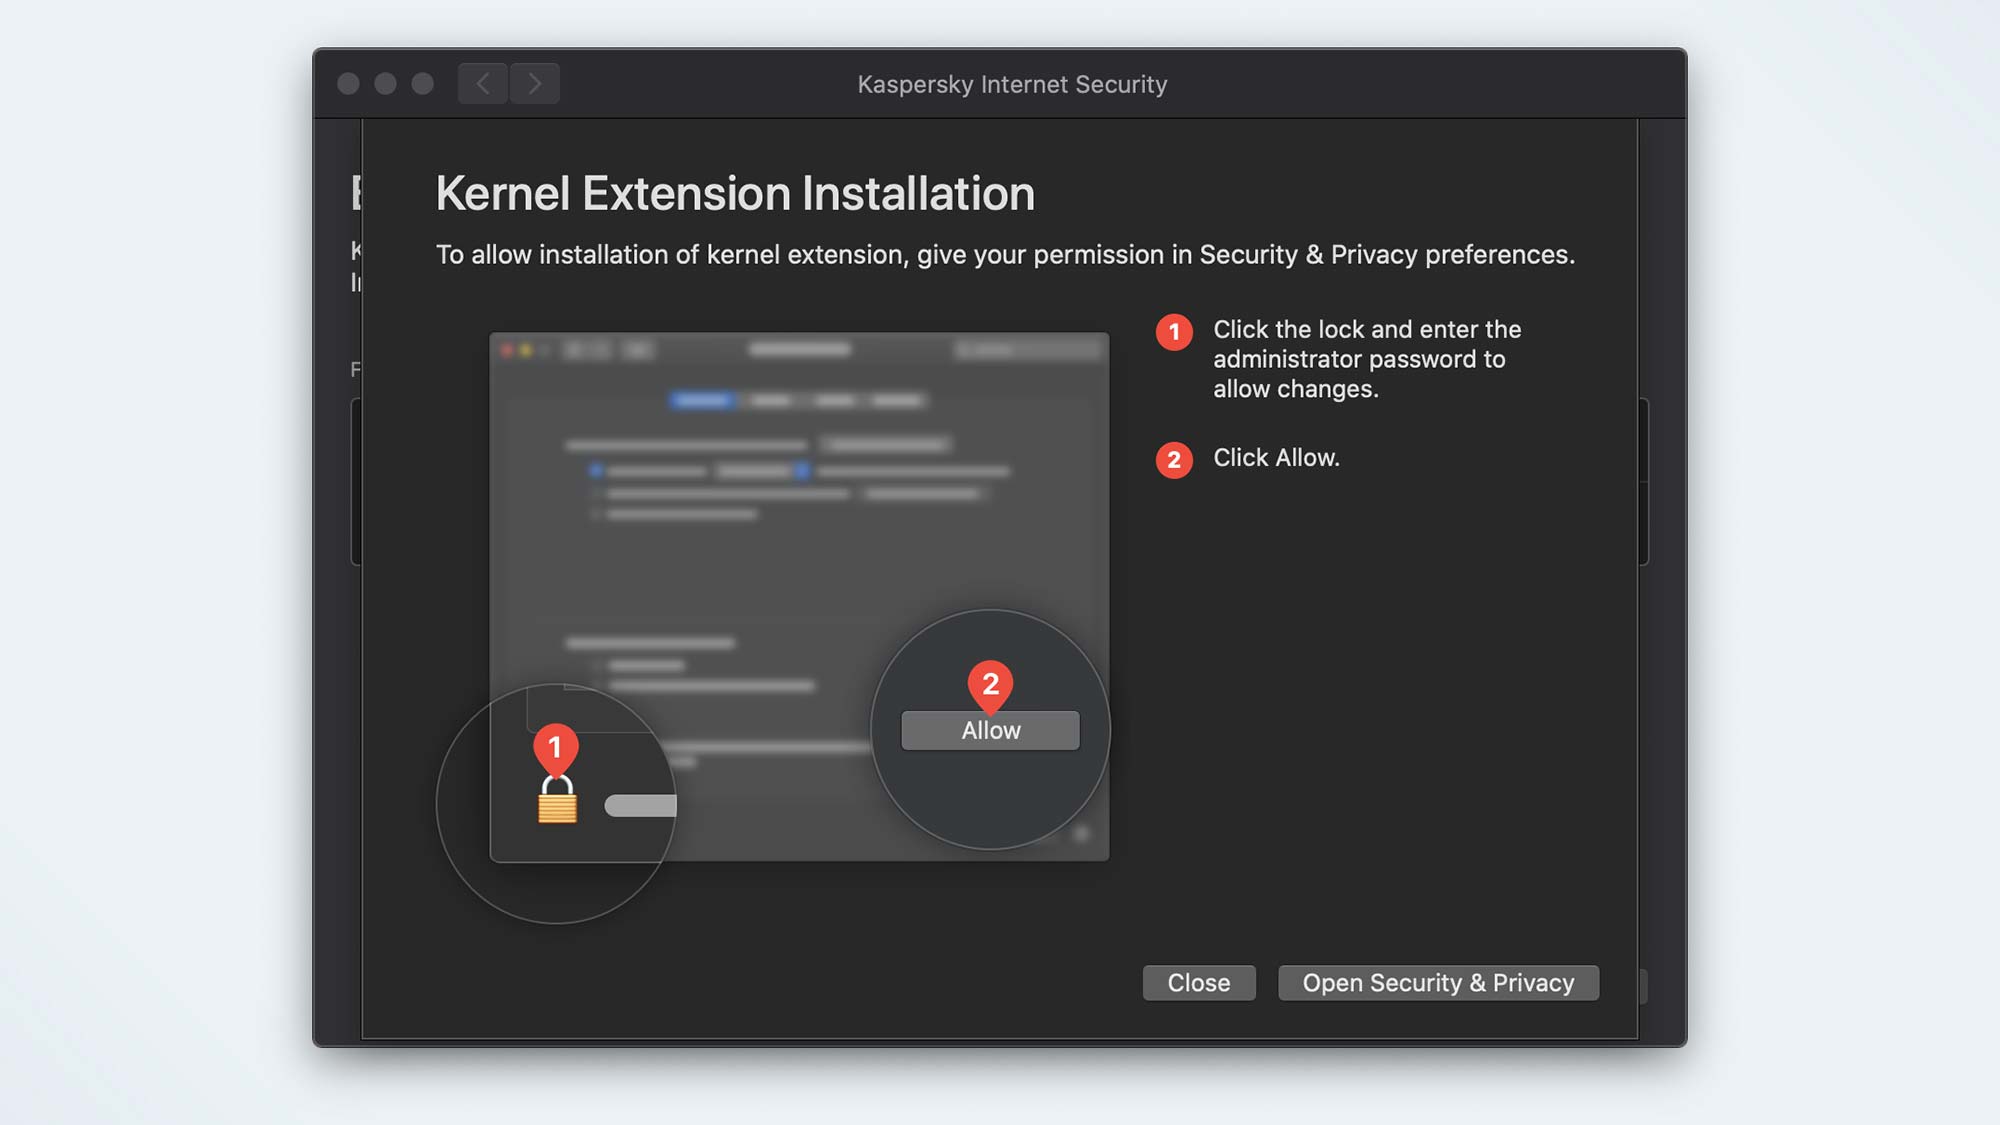 kaspersky internet security for mac